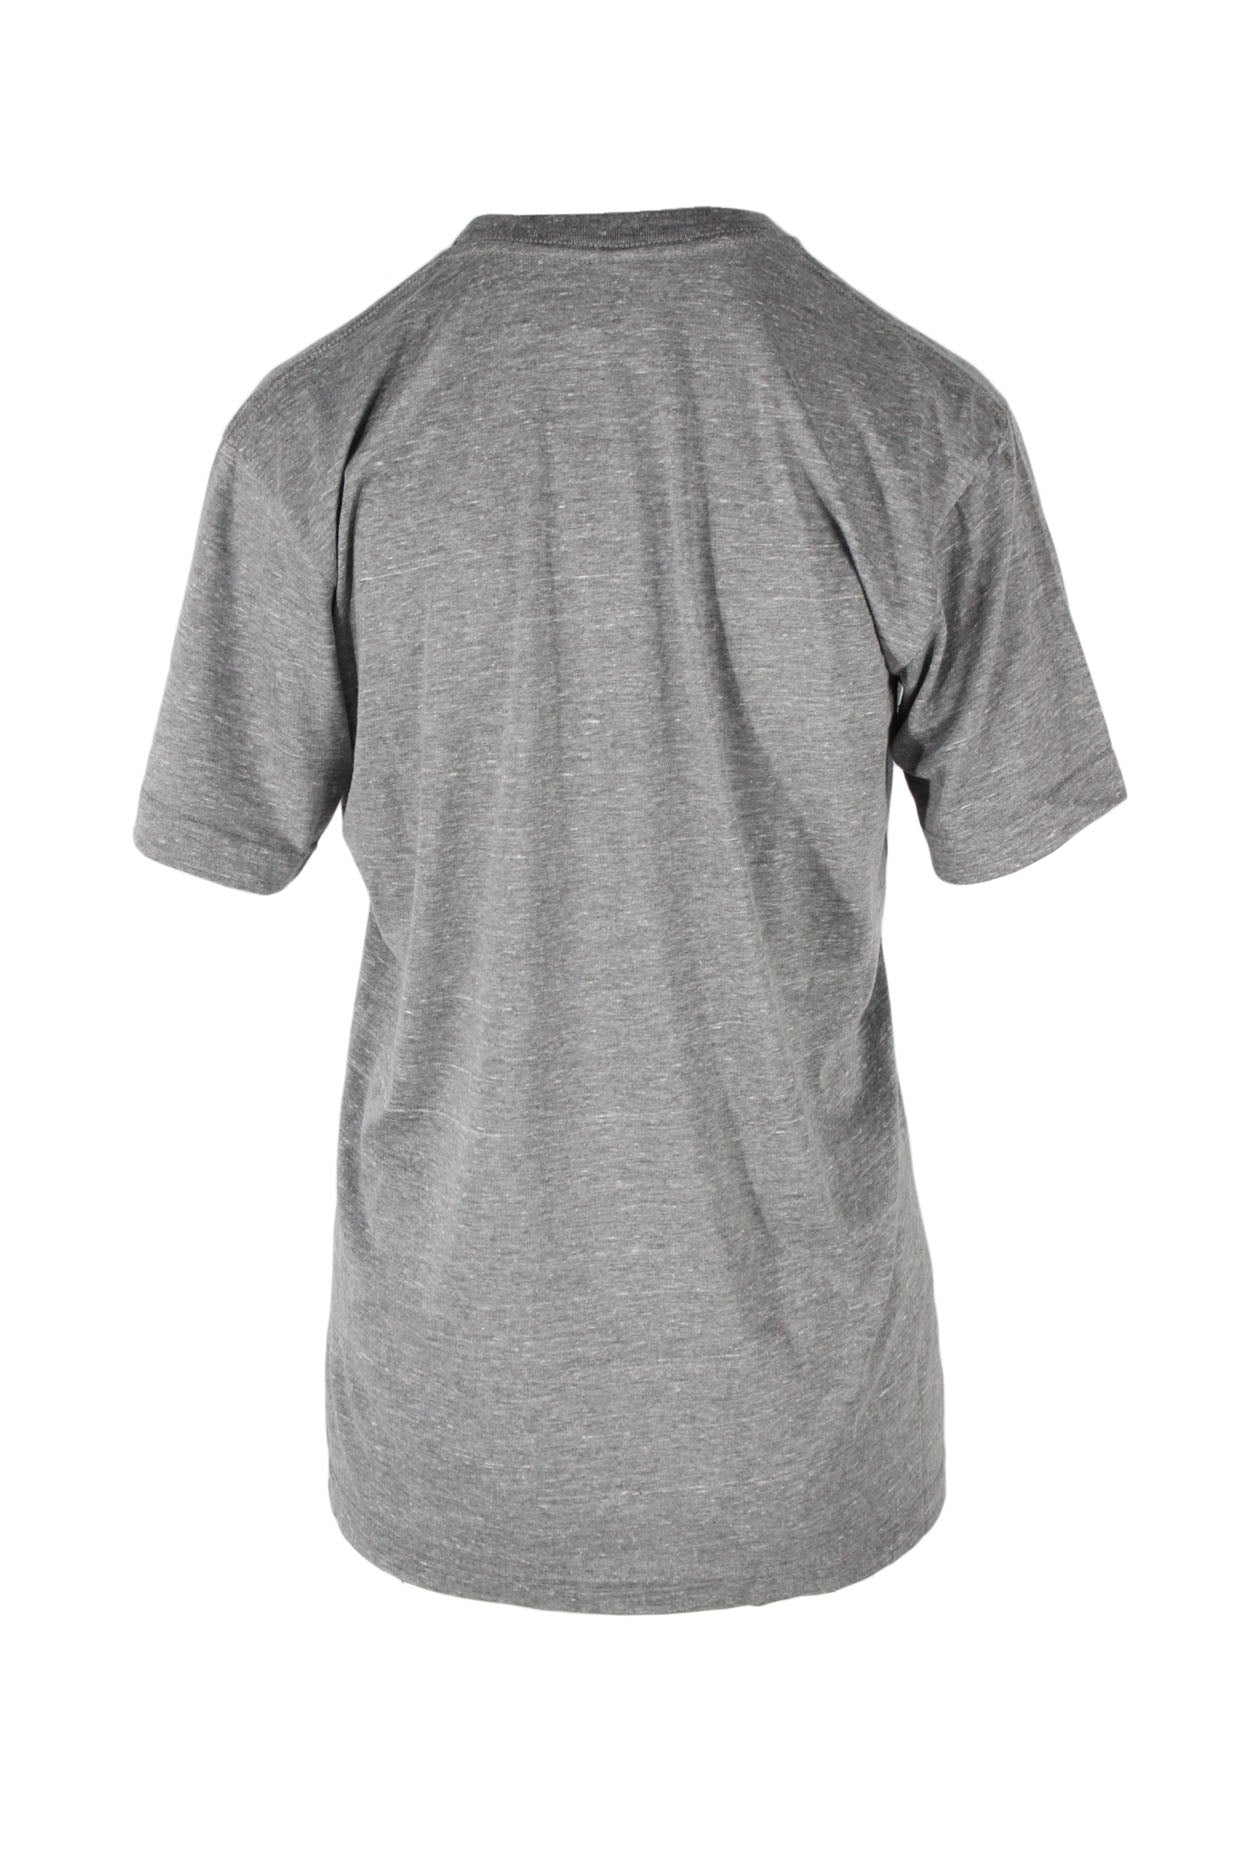 beacon's closet t-shirt (athletic gray) american apparel